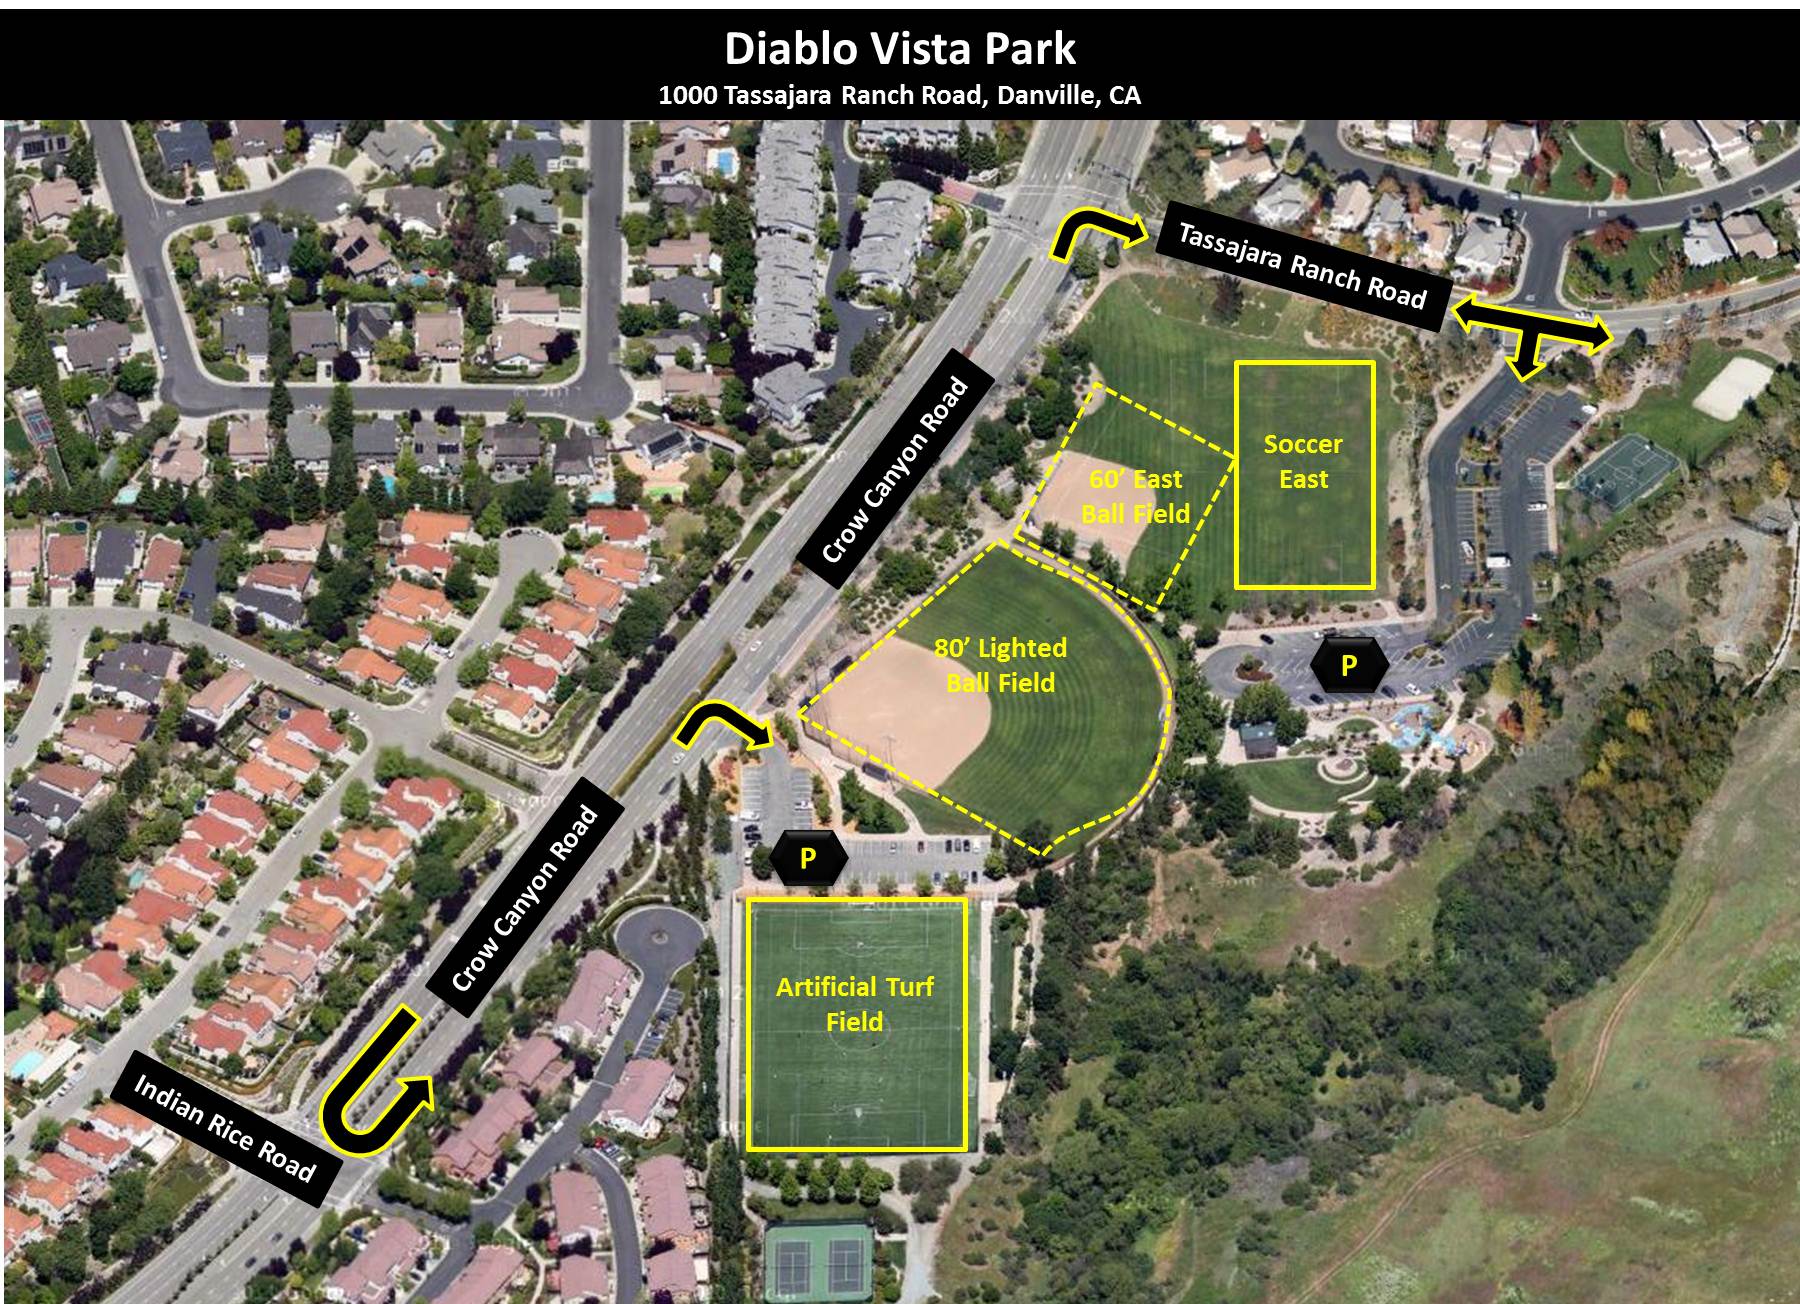 Diablo Vista Park - Sports Fields